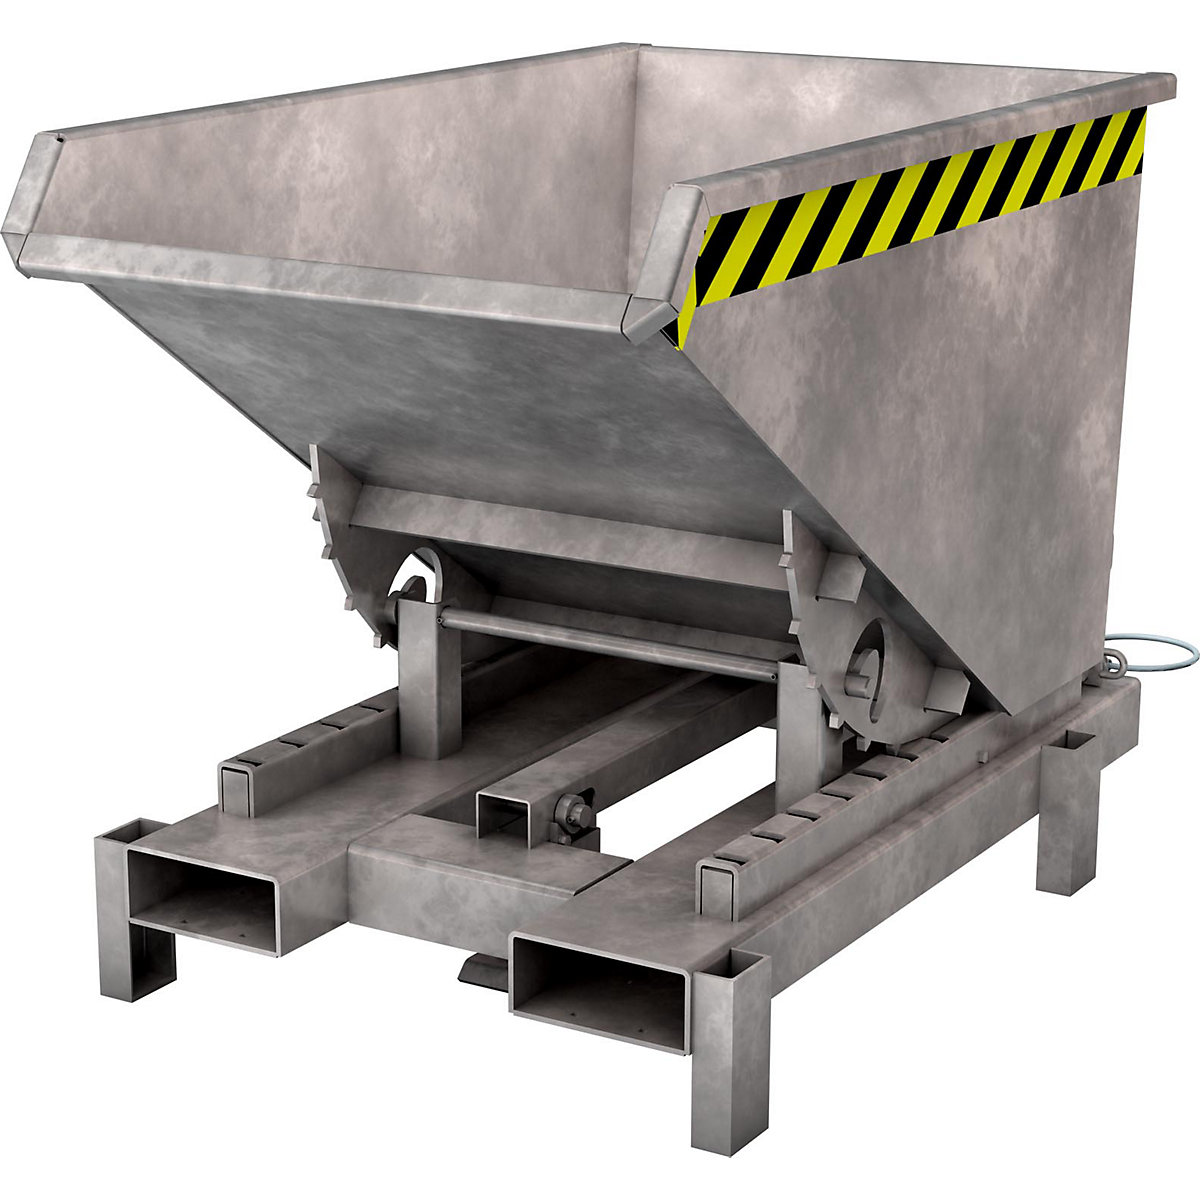 Volquete para cargas pesadas – eurokraft pro, capacidad 0,3 m³, carga máx. 4000 kg, galvanizado al horno según EN ISO 1461-8